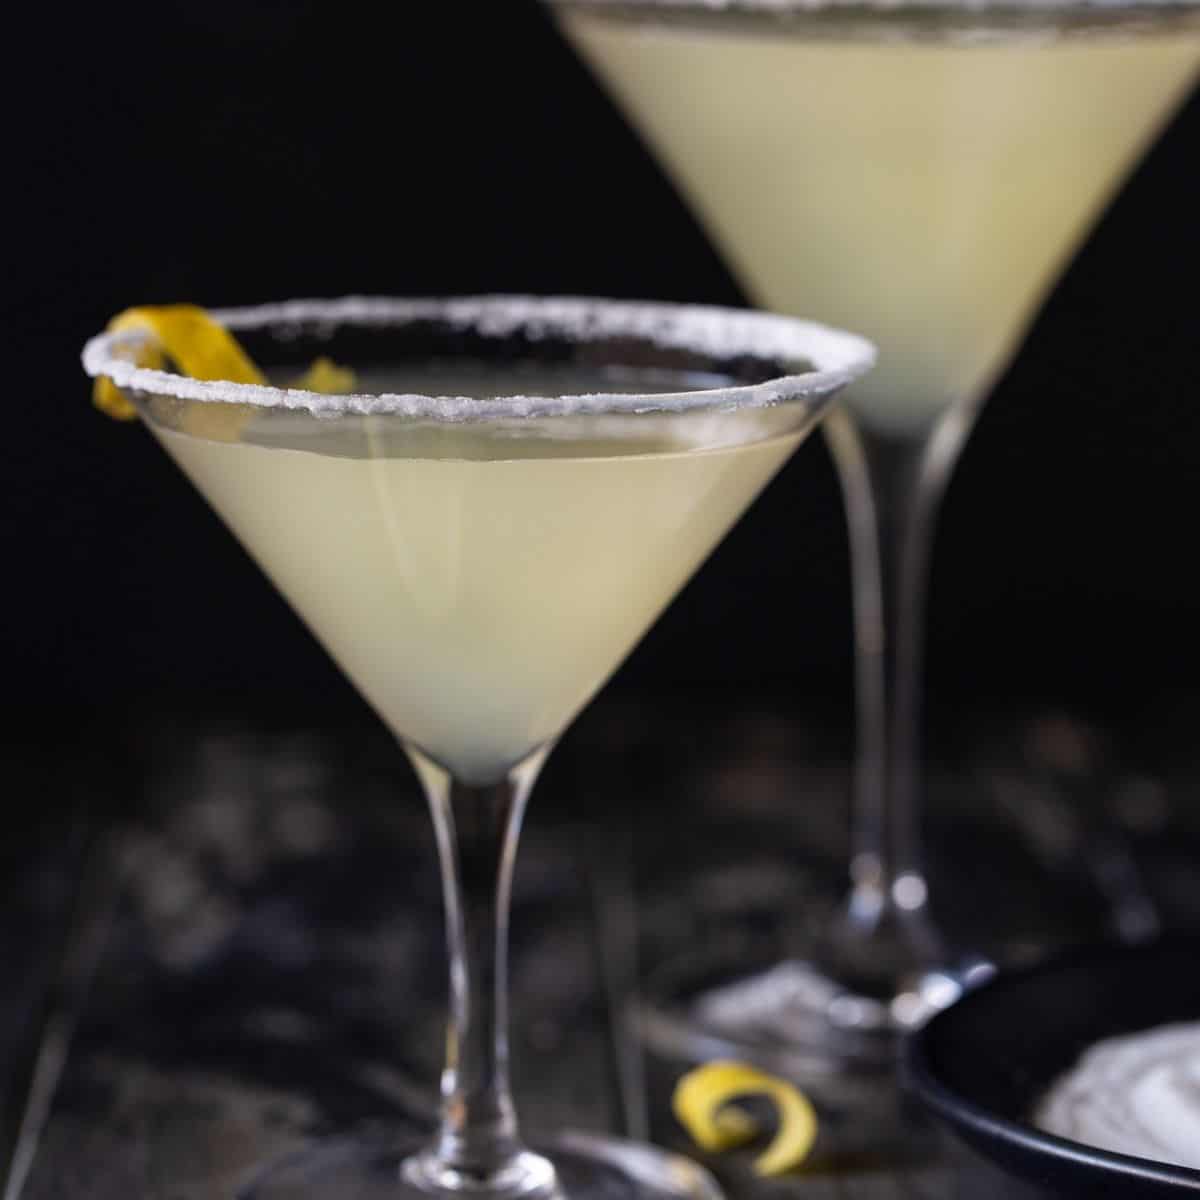 martini glasses on table with lemon peels.